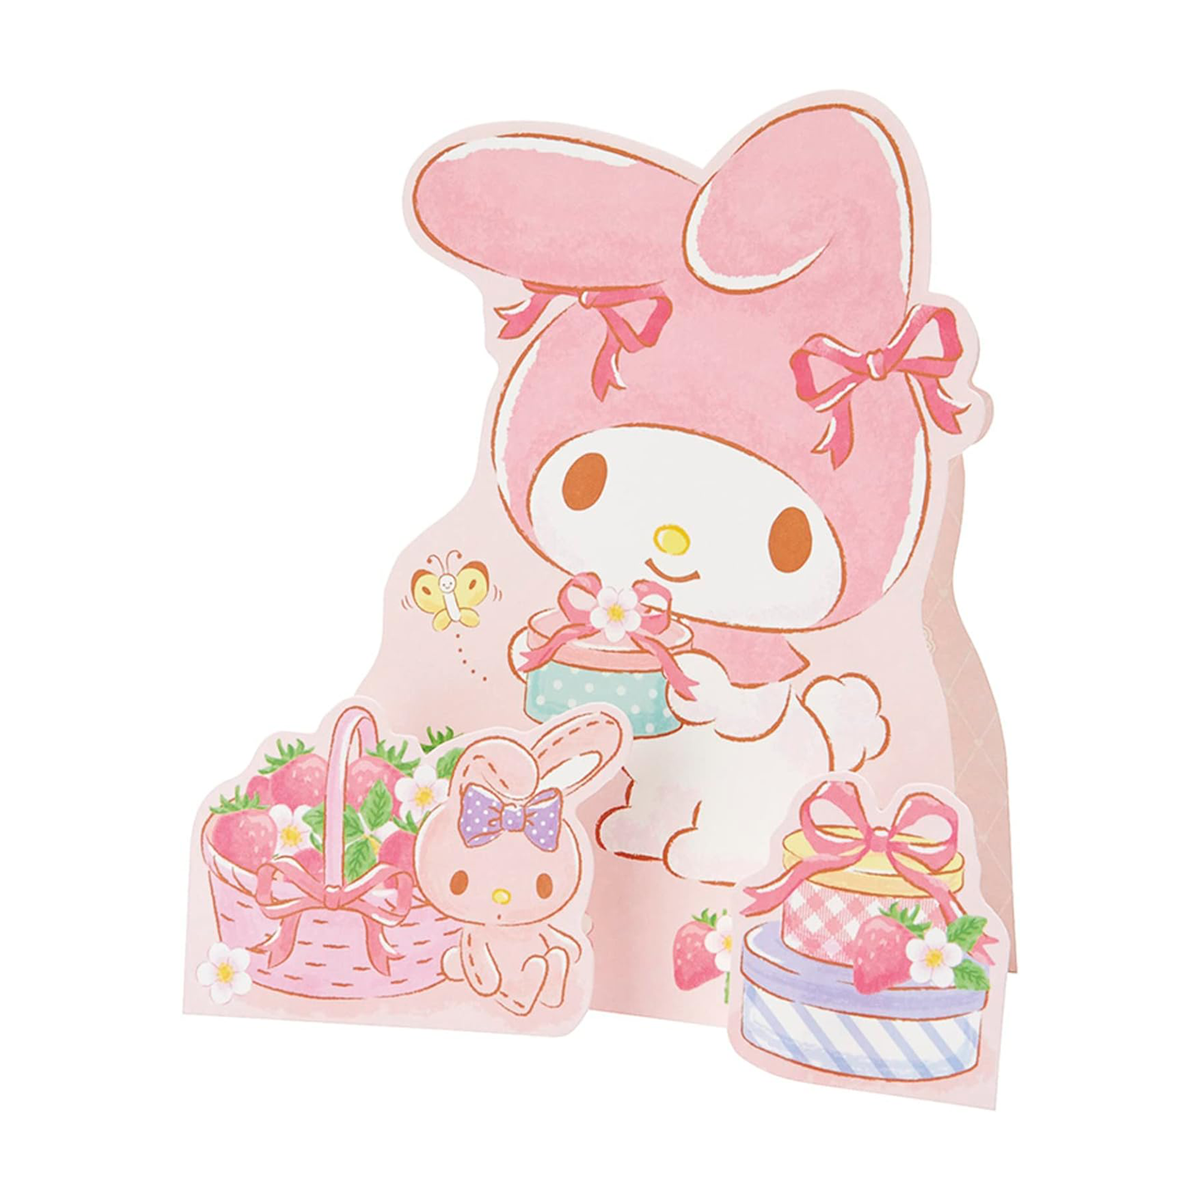 Cute Kawaii Sanrio Hello Kitty Sticker Sheet - 2018 Collectible